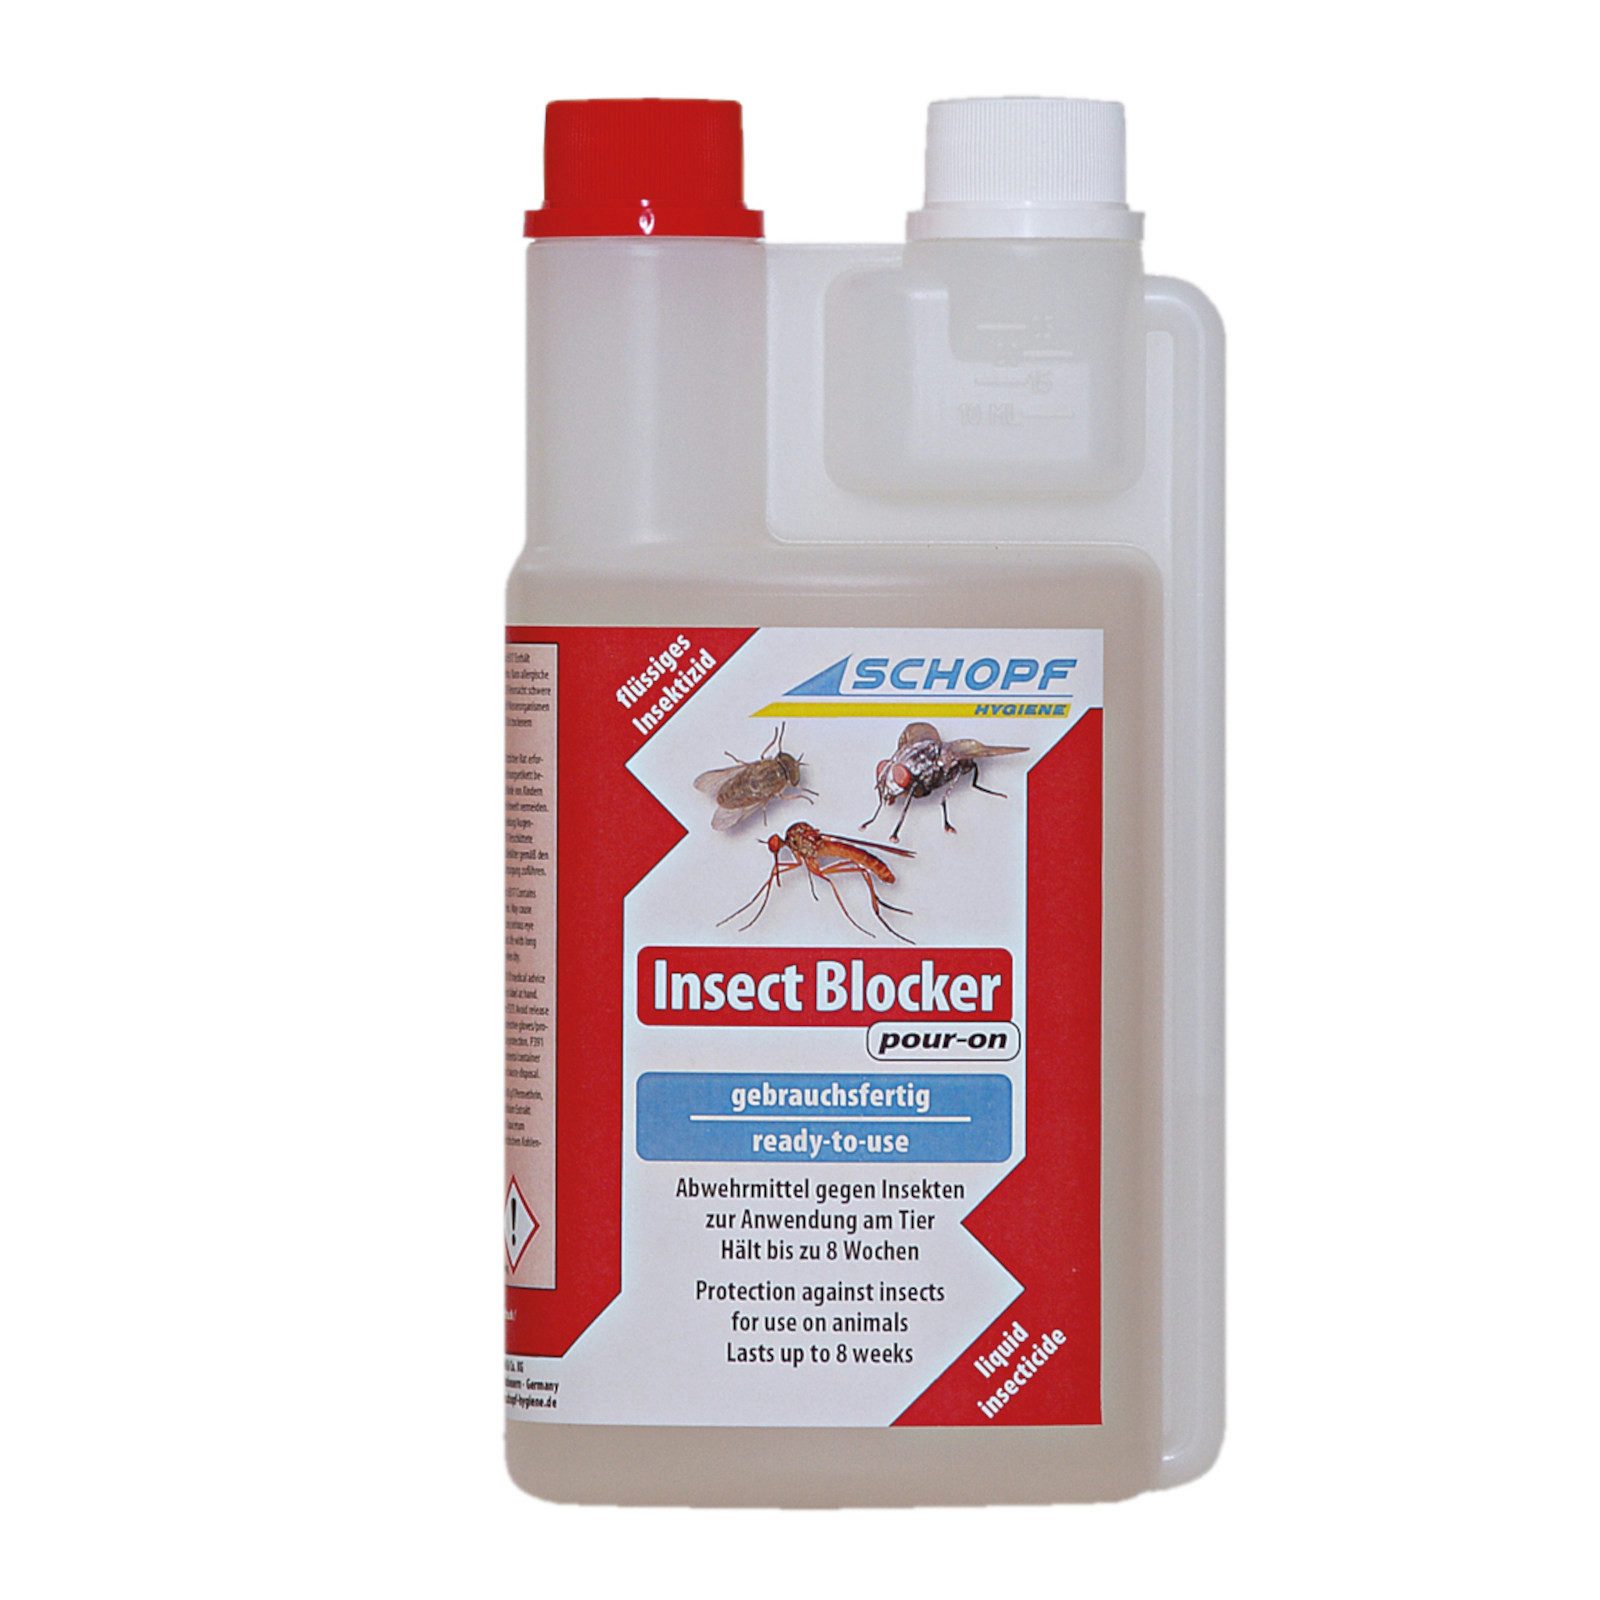 Schopf Insektenspray Insect Blocker pour-on - Abwehrmittel gegen Insekten, 500 ml